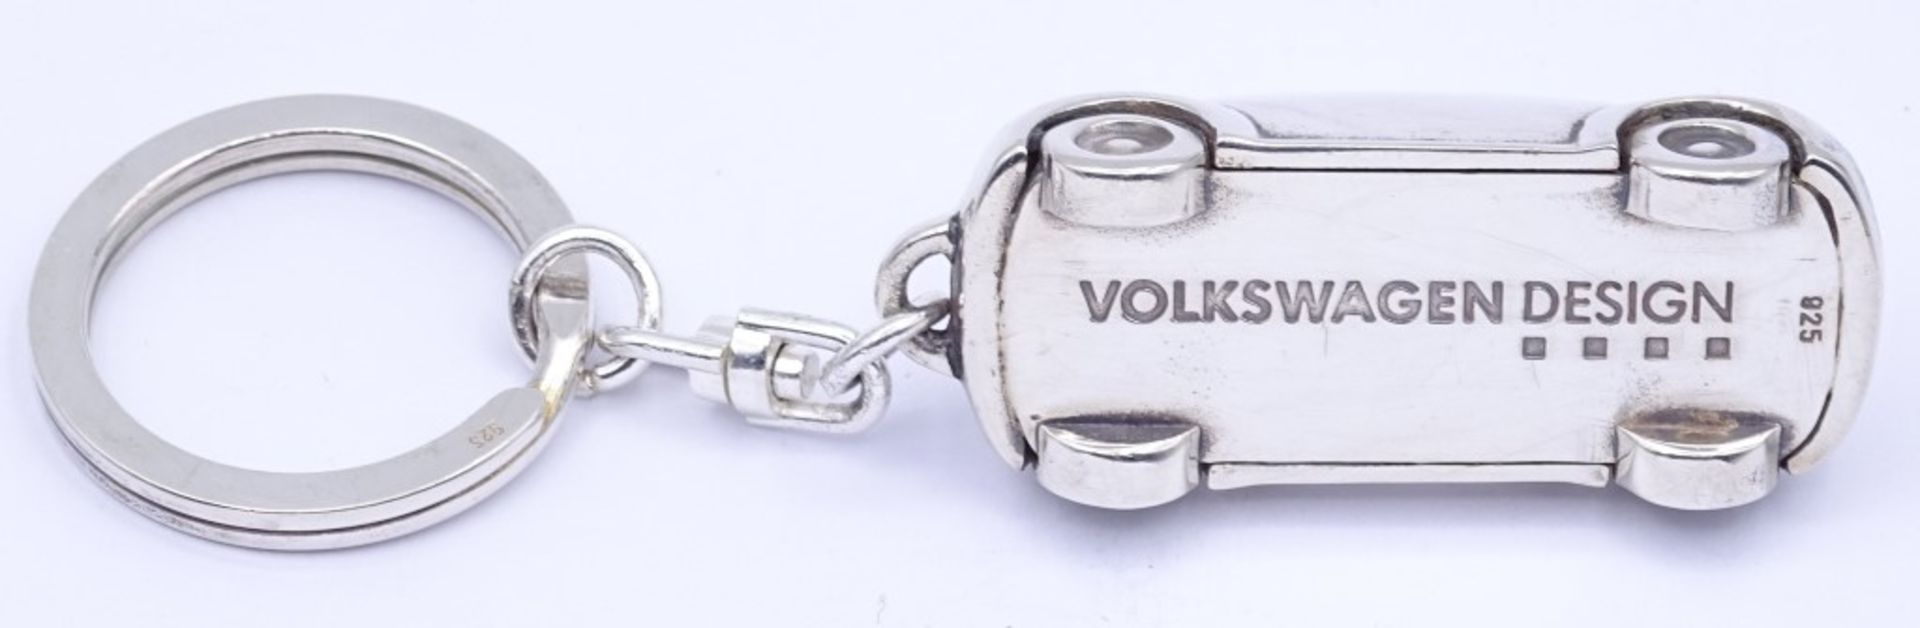 Schlüssel Anhänger in Sterling Silber 925/000 Volkswagen Design,ges.Gew.54,3gr - Image 4 of 5